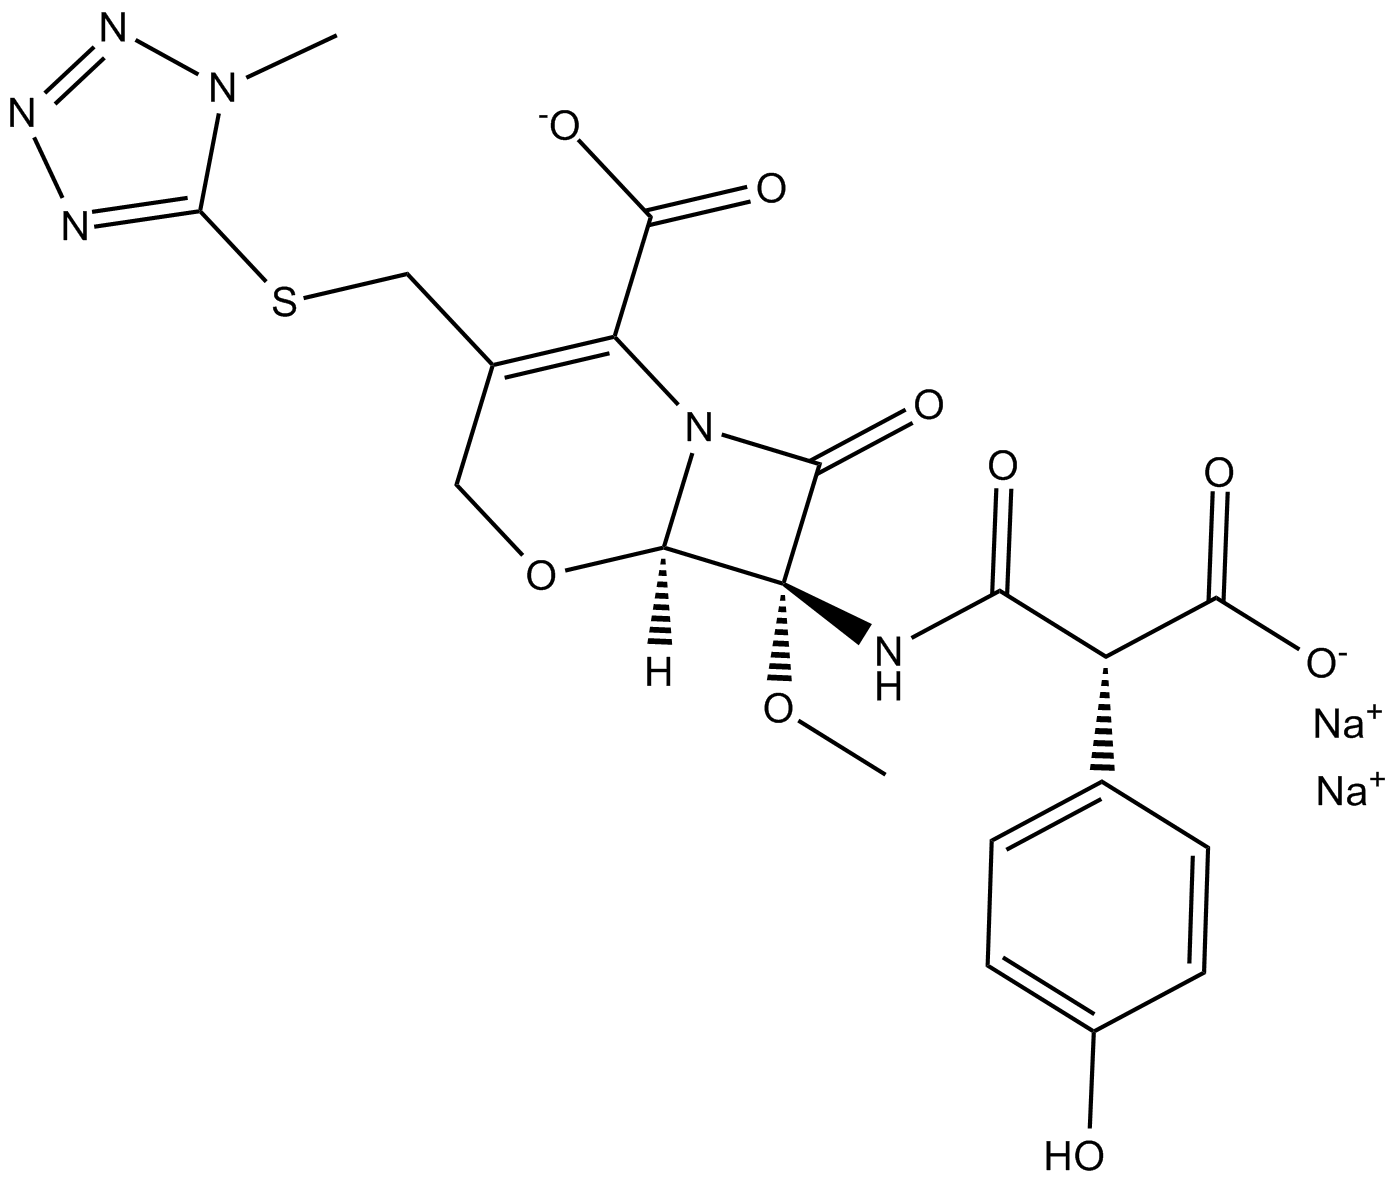 Moxalactam (sodium salt)